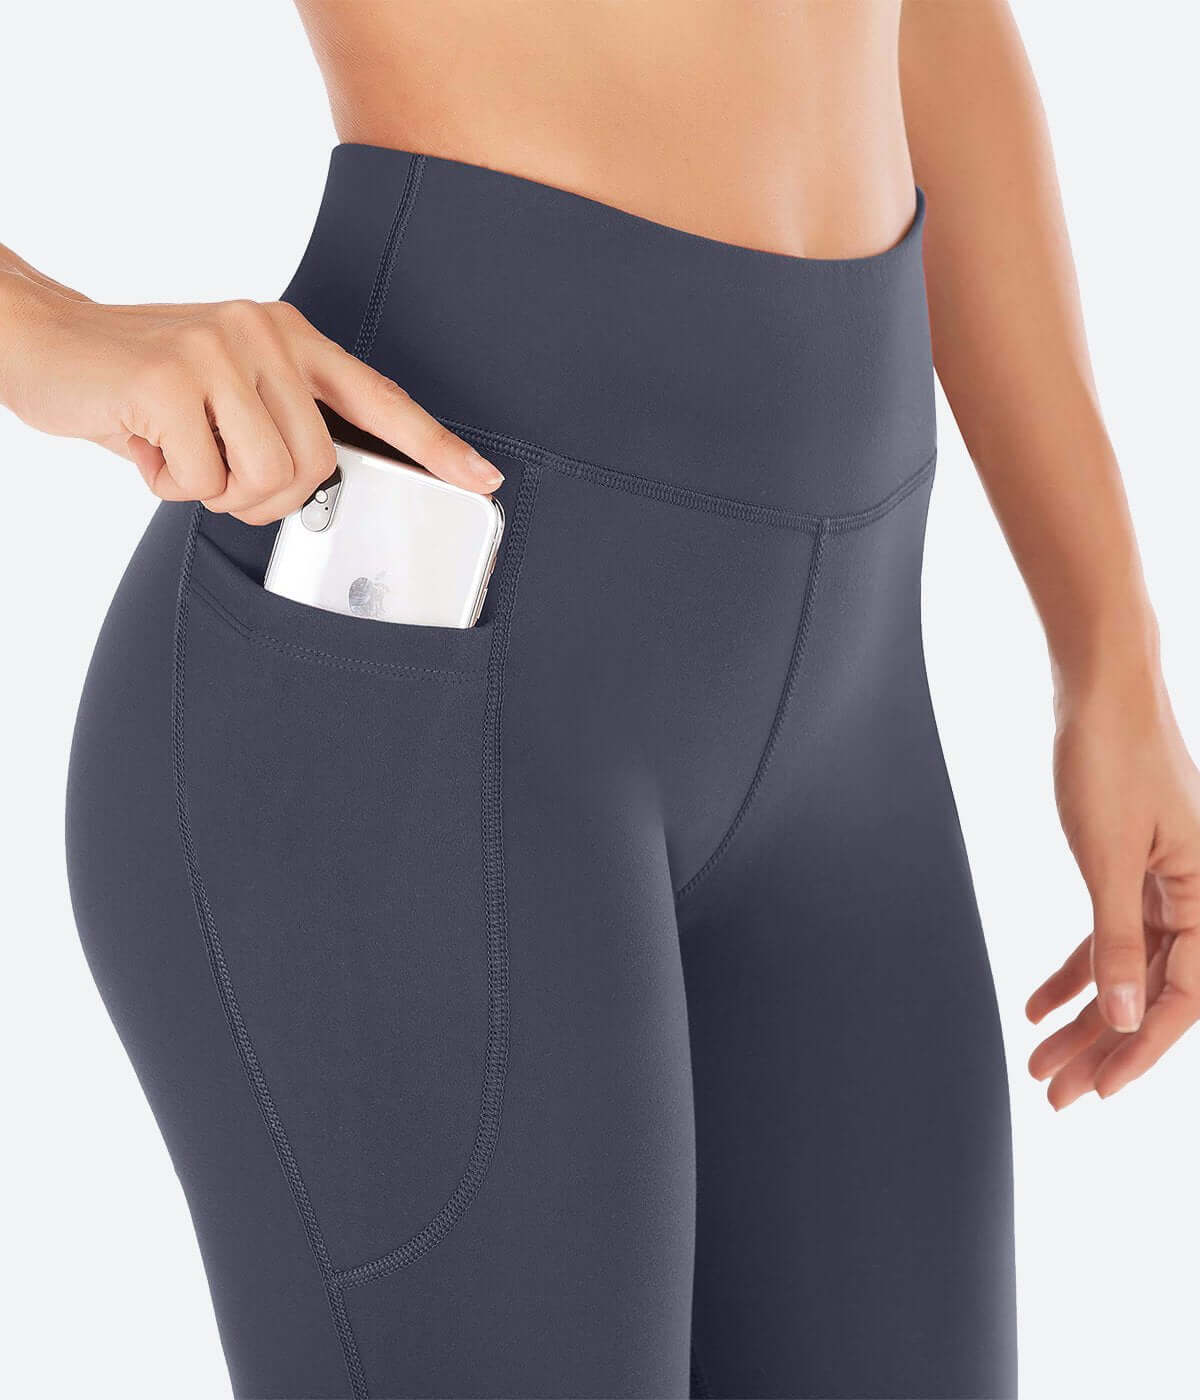 IUGA Bootcut Yoga Pants with Pockets for Women High Waist Workout Bootleg  Pants Tummy Control, 4 Pockets Work Pants for Women, Black, L price in UAE,  UAE